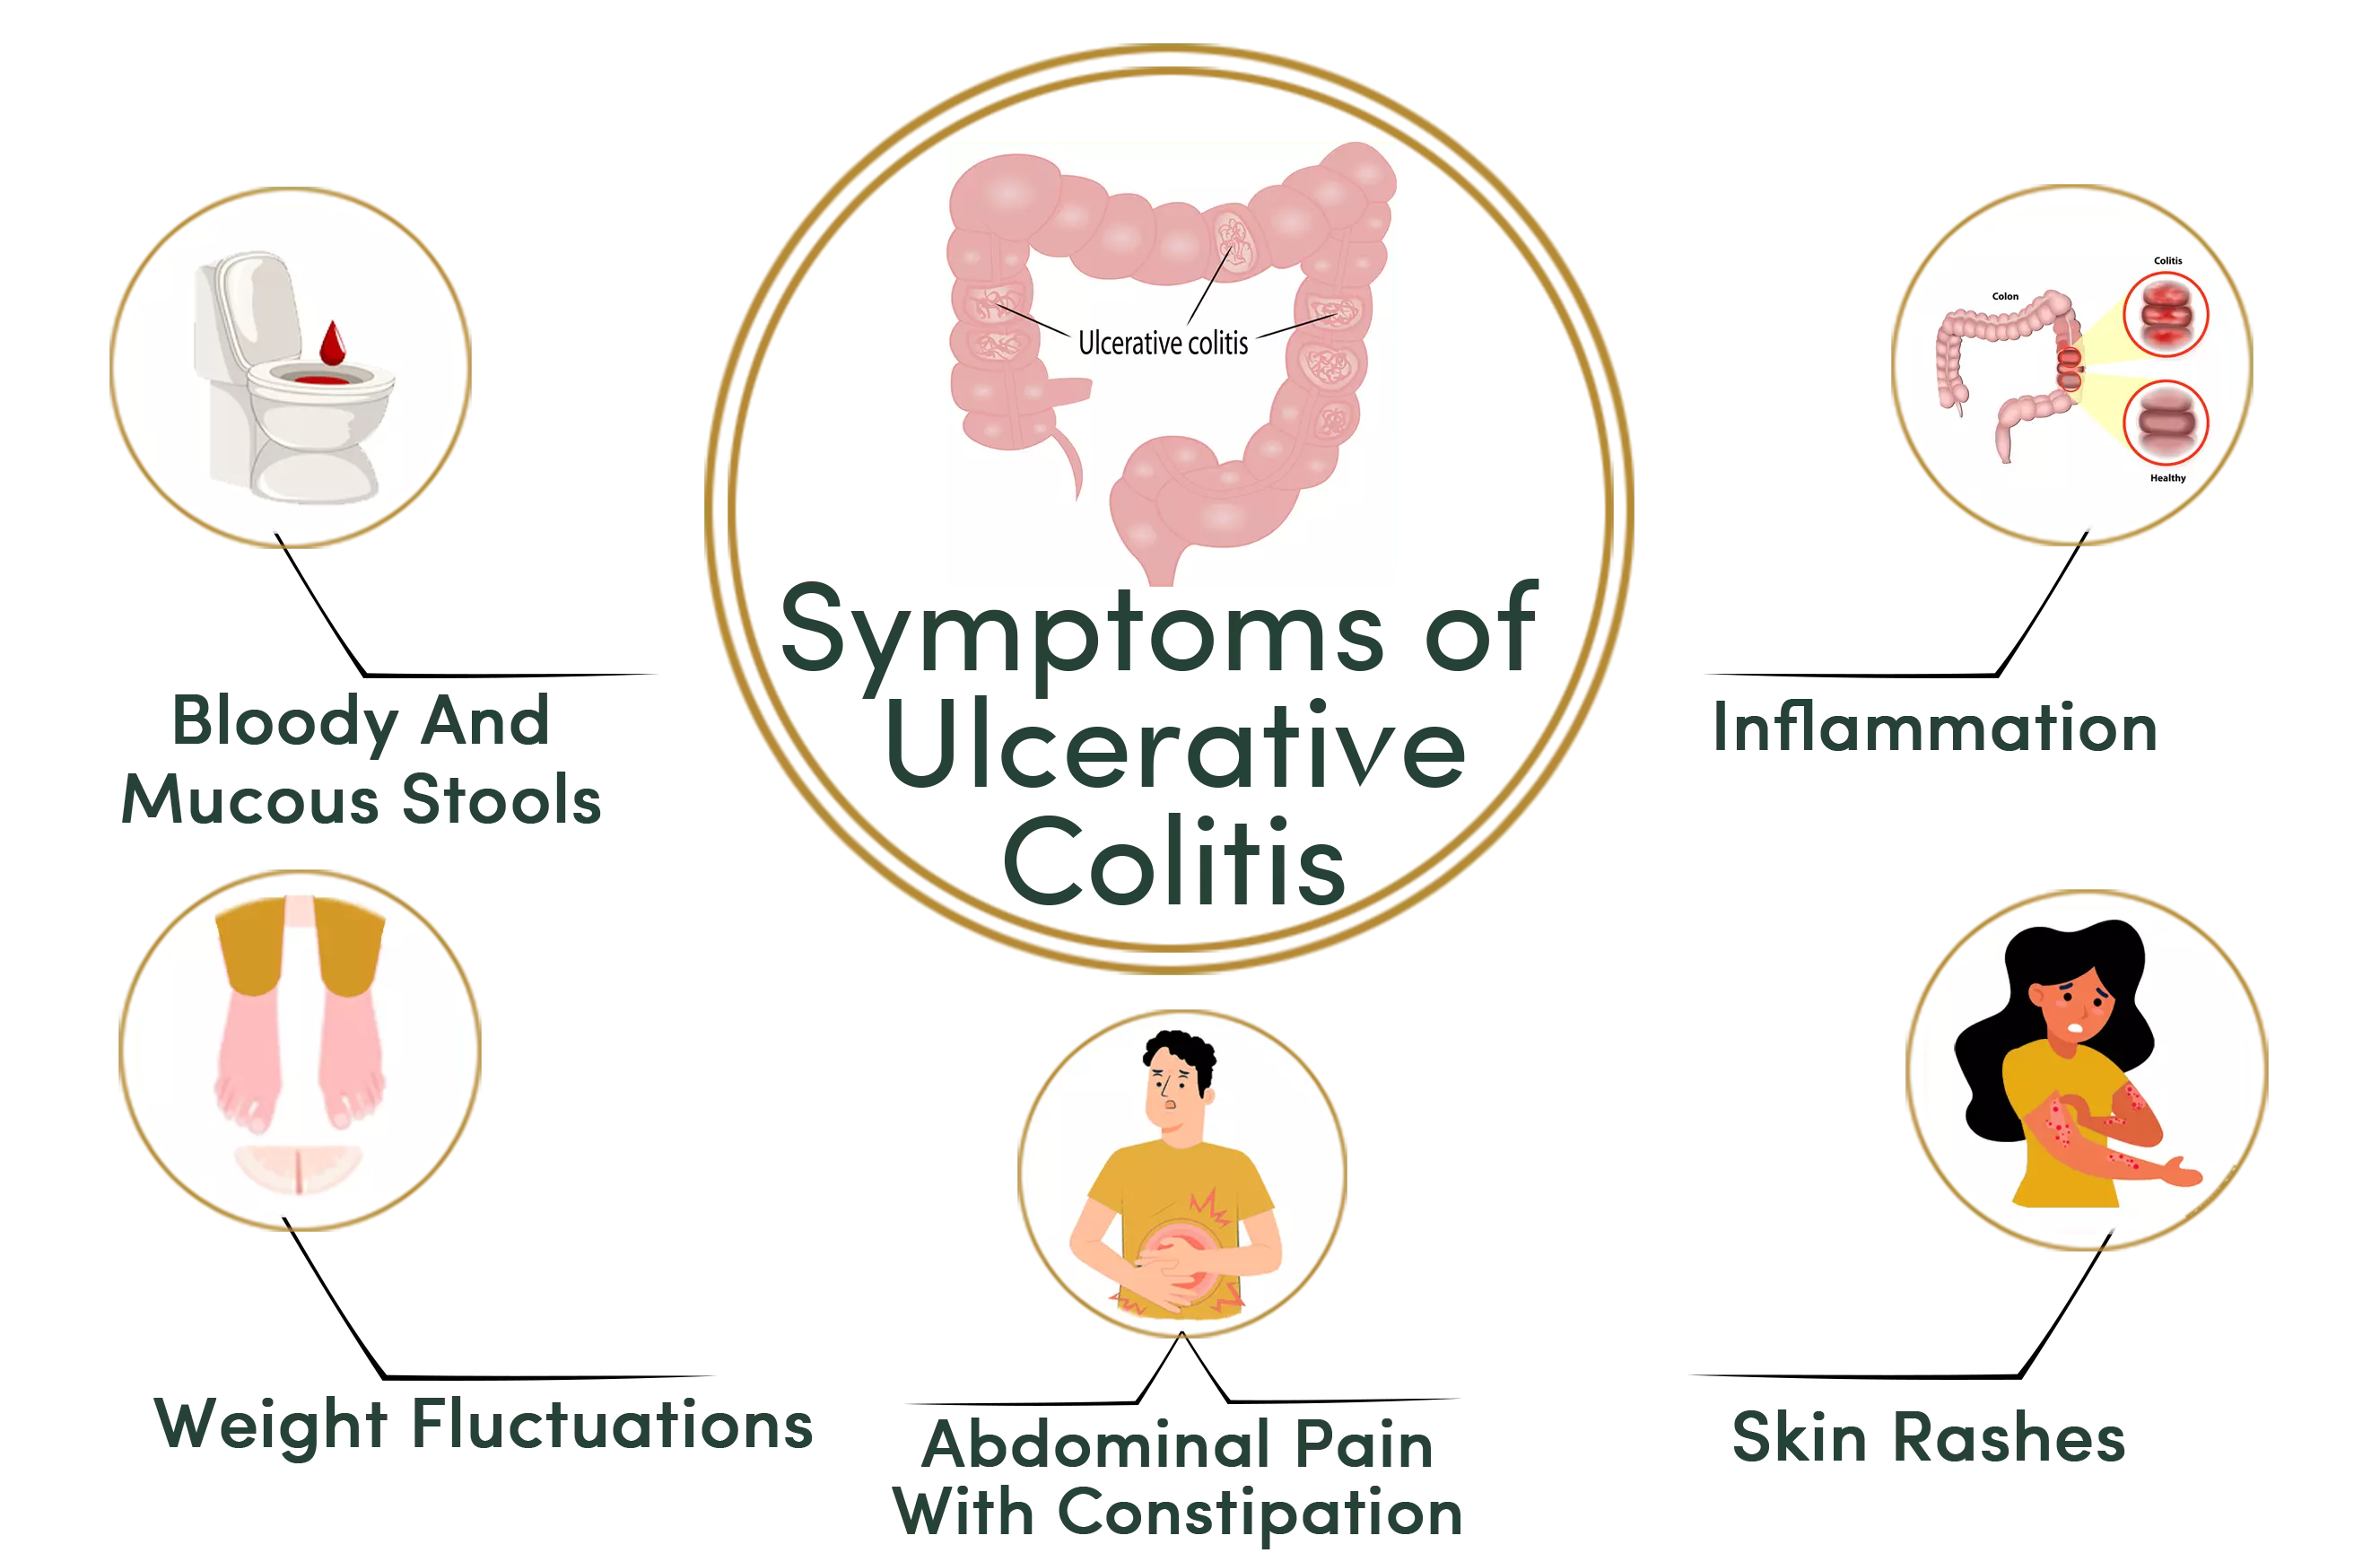 Ulcerative Colitis symptoms